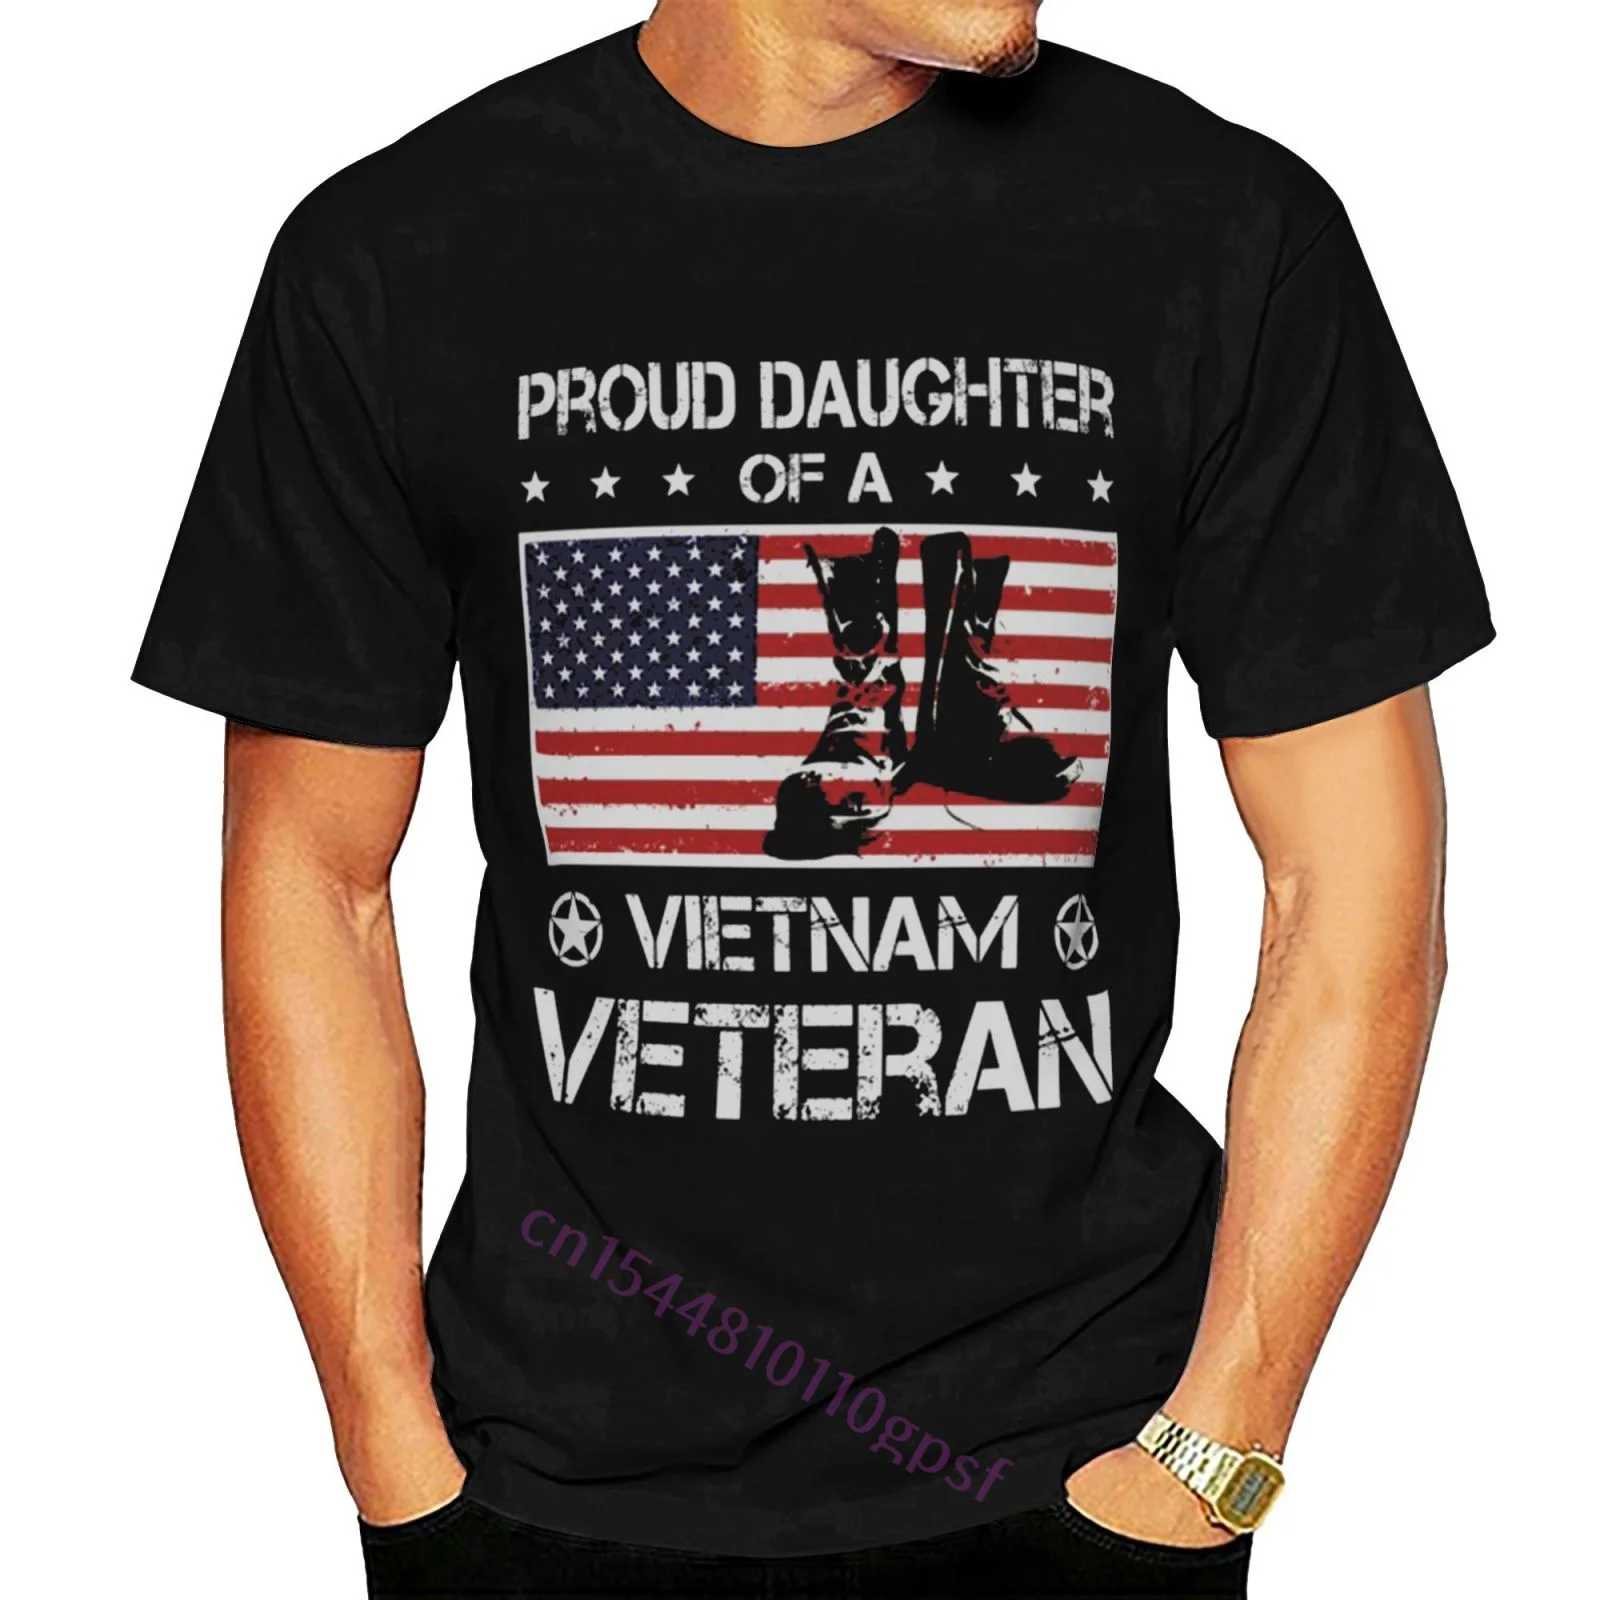 

Proud Daughter Of A Vietnam Veteran Tshirt T-Shirt Men Short Sleeve Humor Tee Shirt Round Neck 100% Cotton Funny Graphic T Shirt